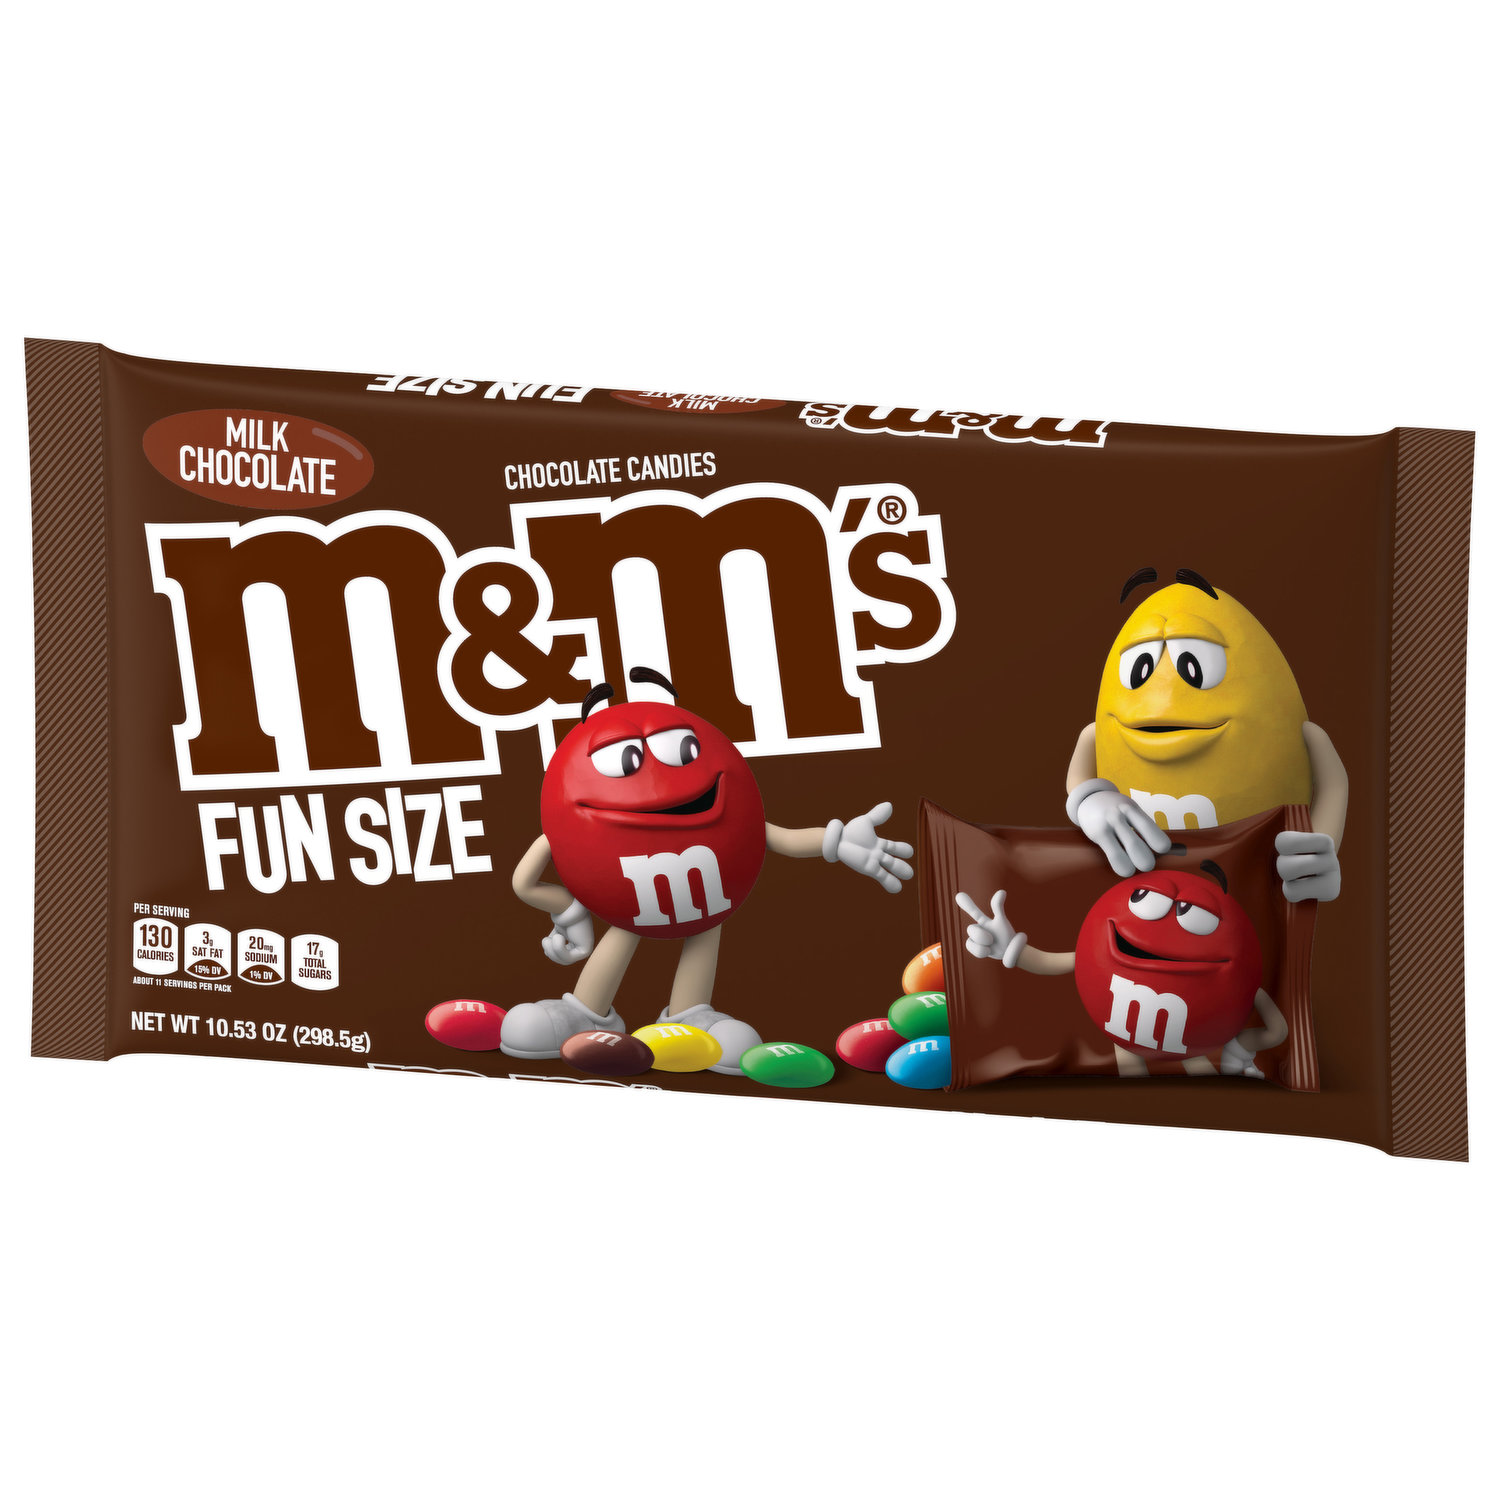 M and Ms Fun Size Milk Chocolate Candy, 20 Pound.